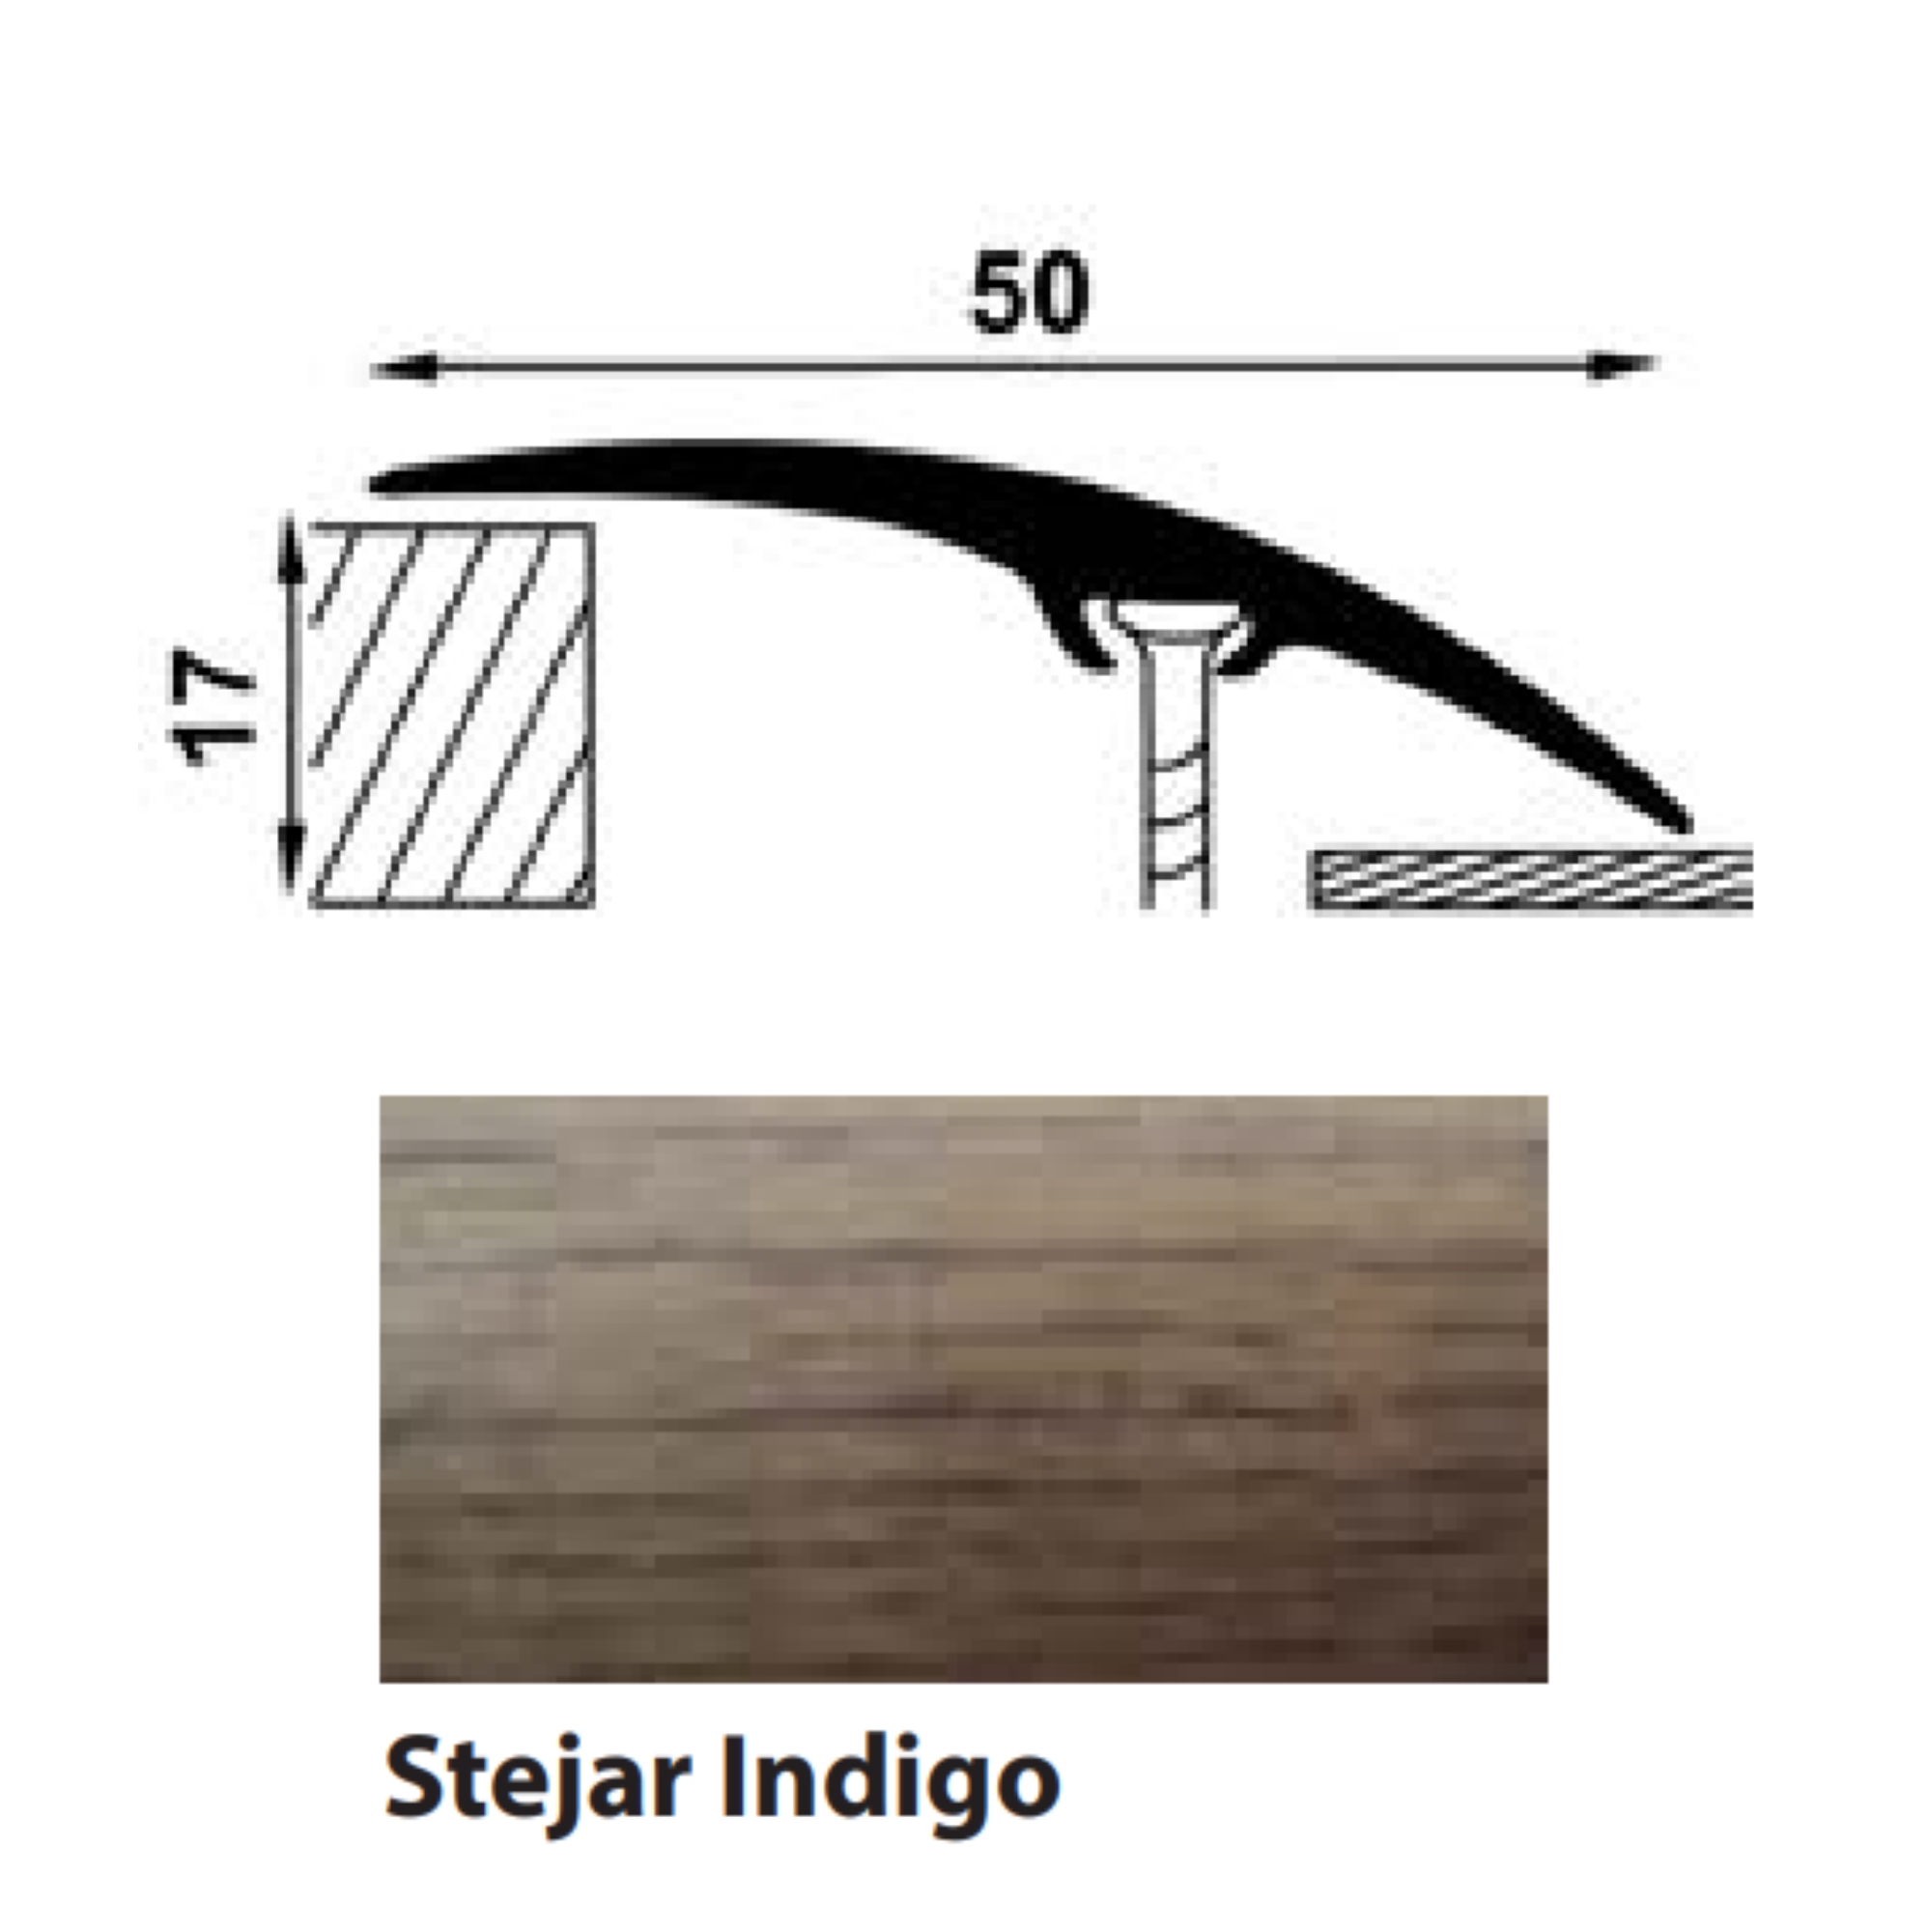 Profile de trecere - Profil aluminiu de trecere, cu surub ascuns, PM75601, stejar indigo, 900 x 50 mm, profiline.ro